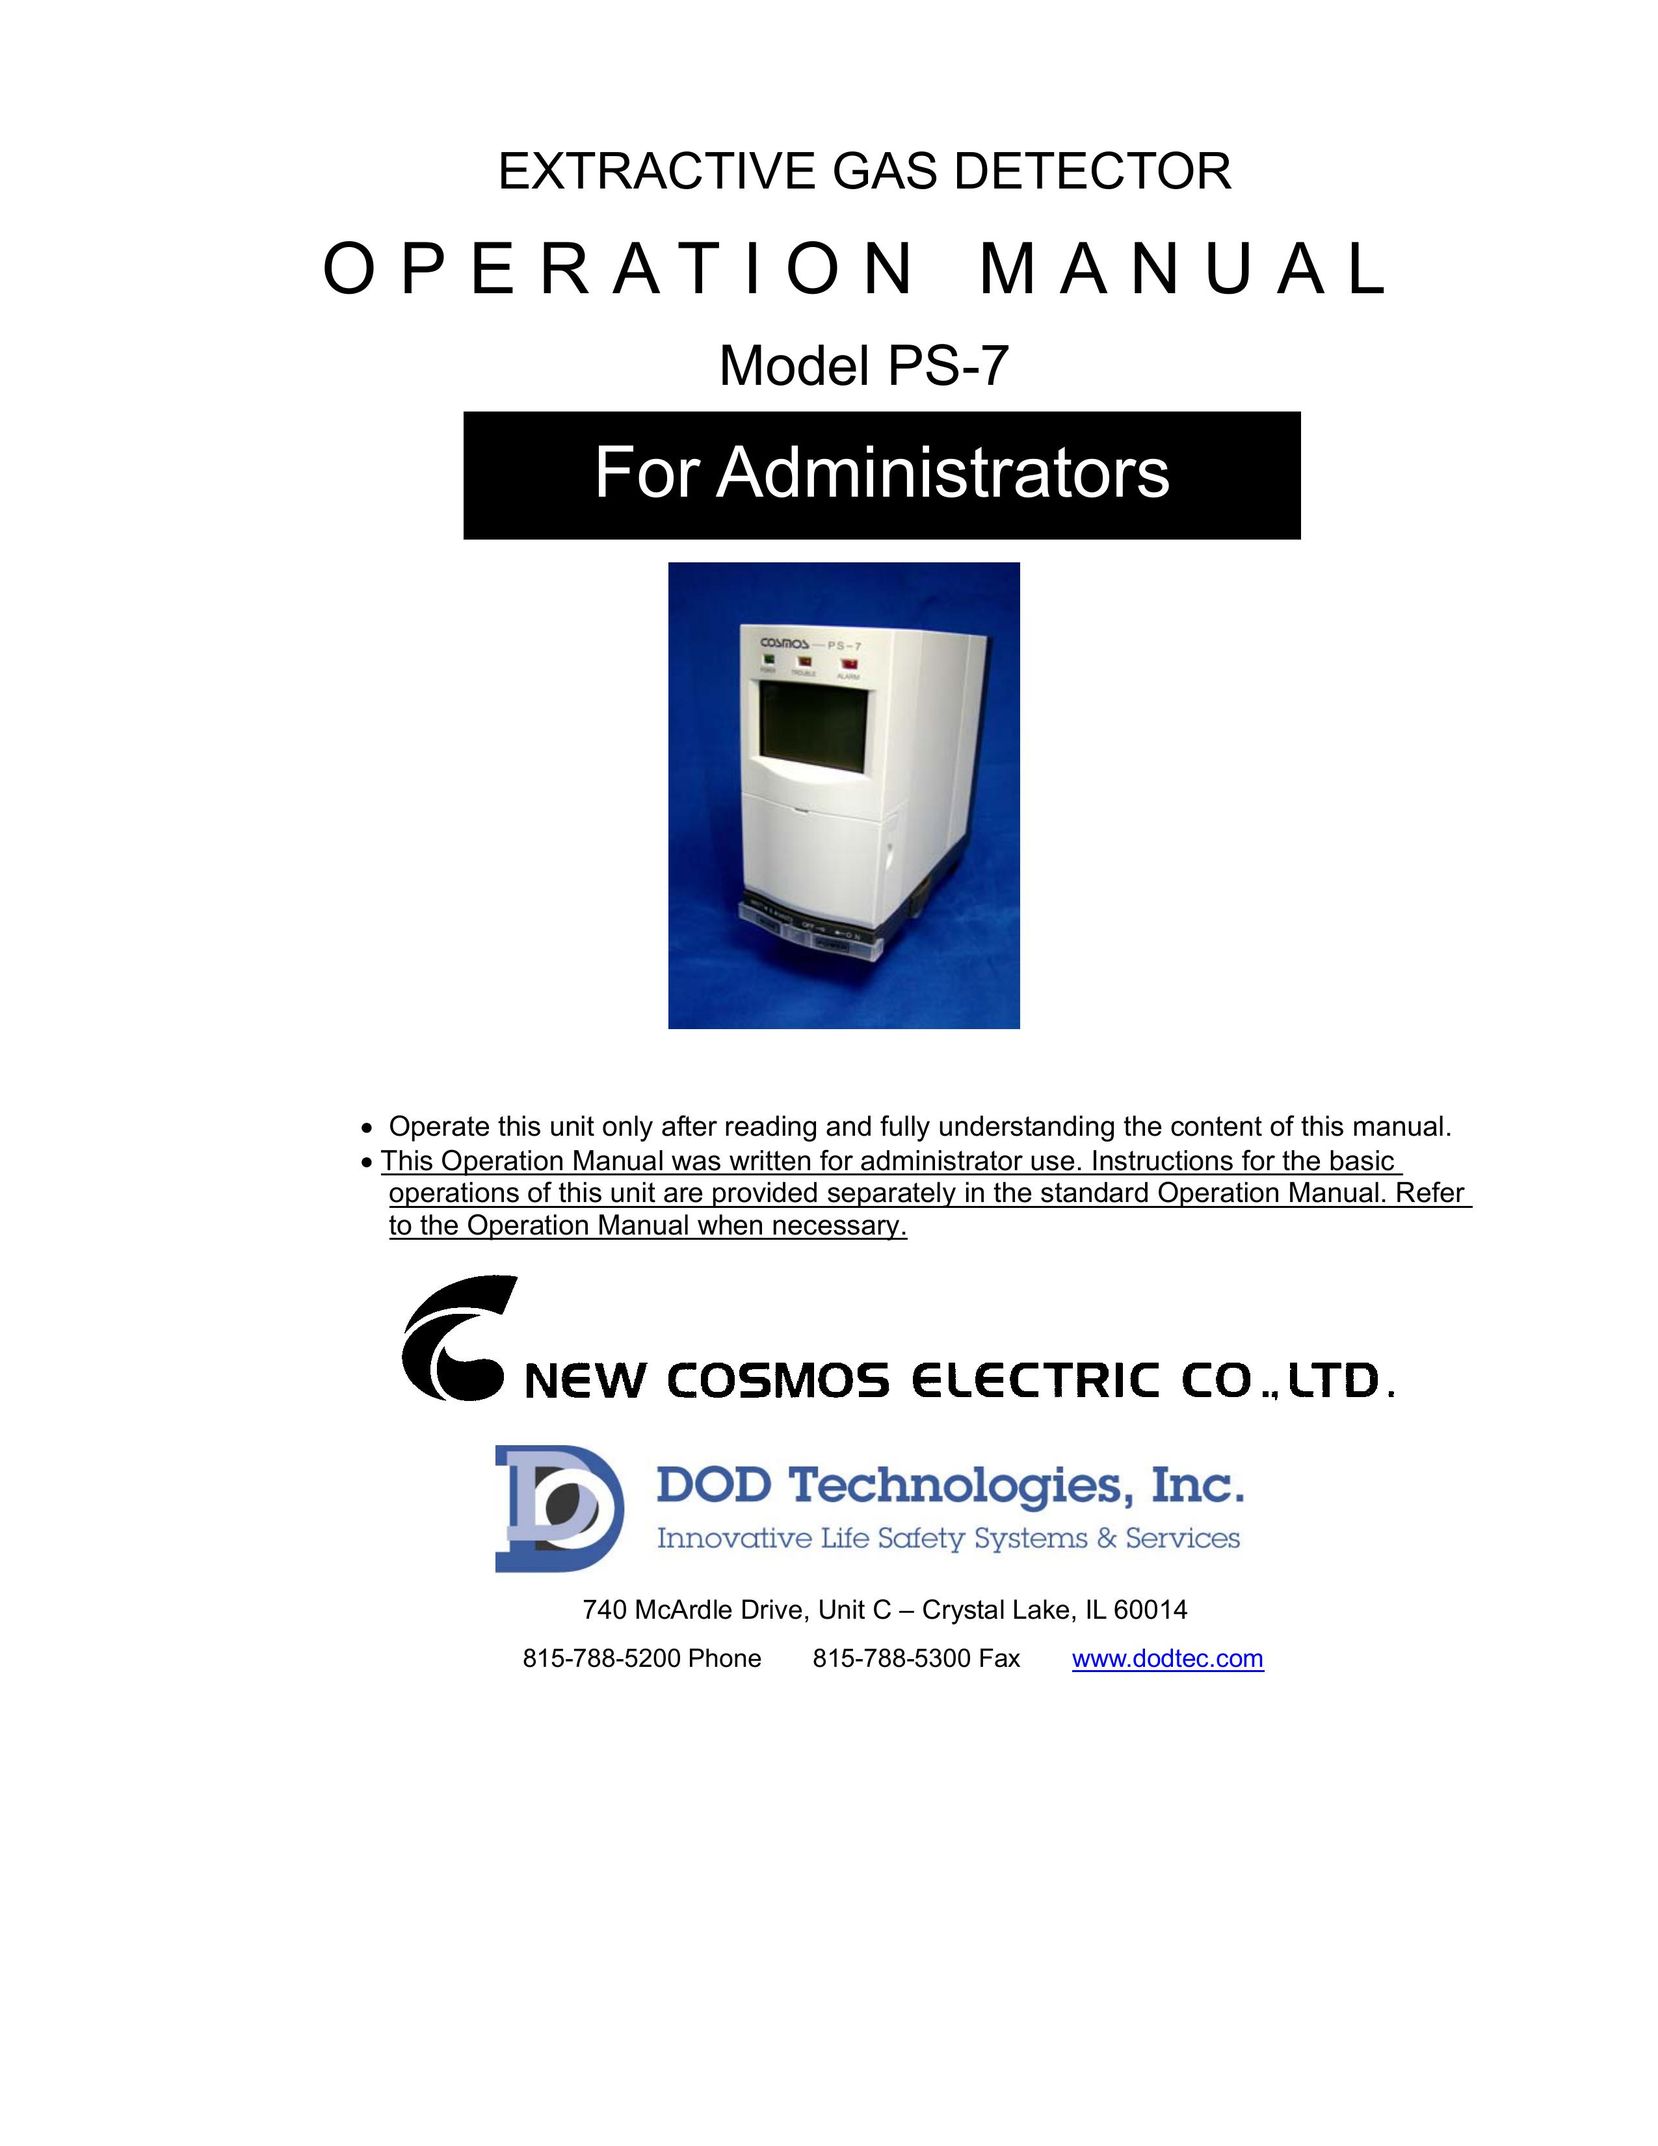 DOD PS-7 Carbon Monoxide Alarm User Manual